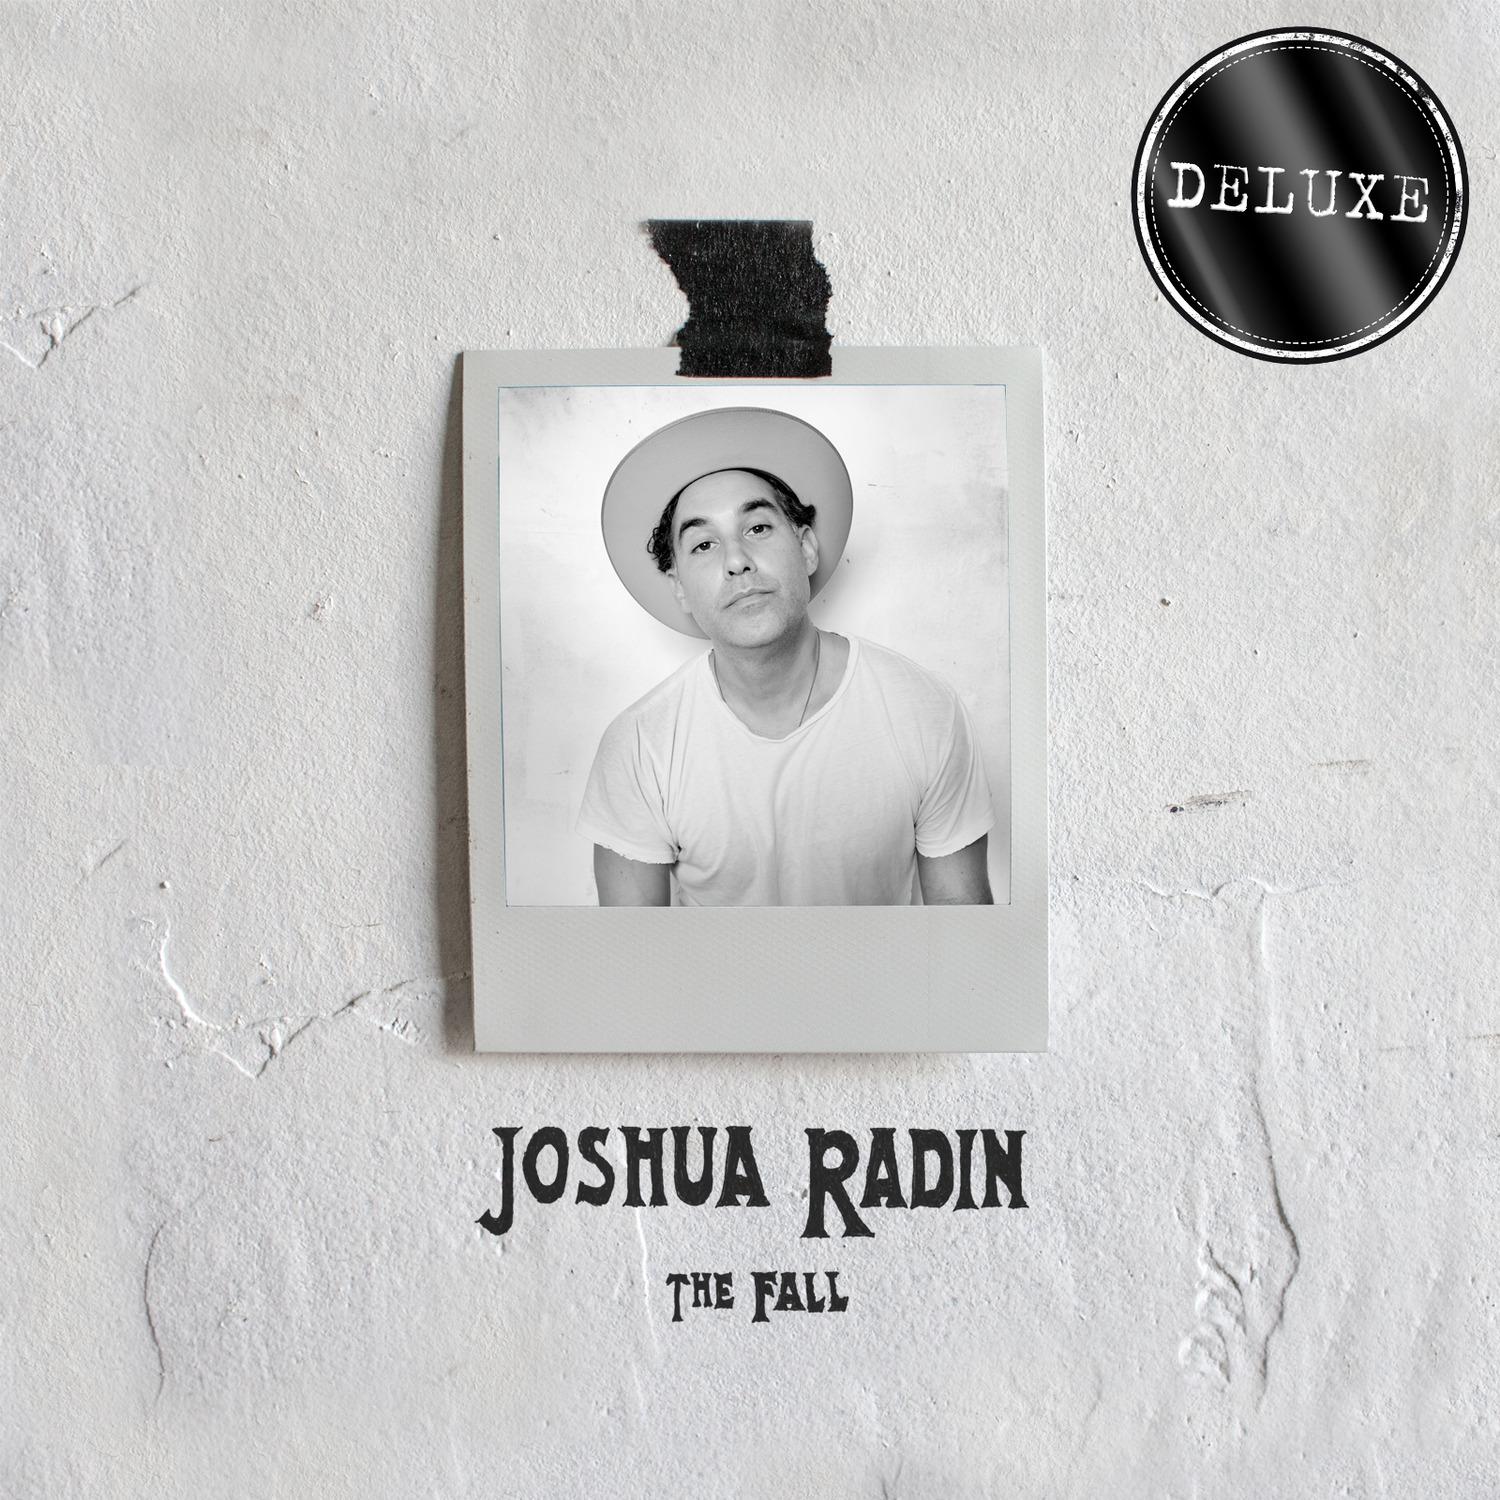 Joshua Radin - Song for You